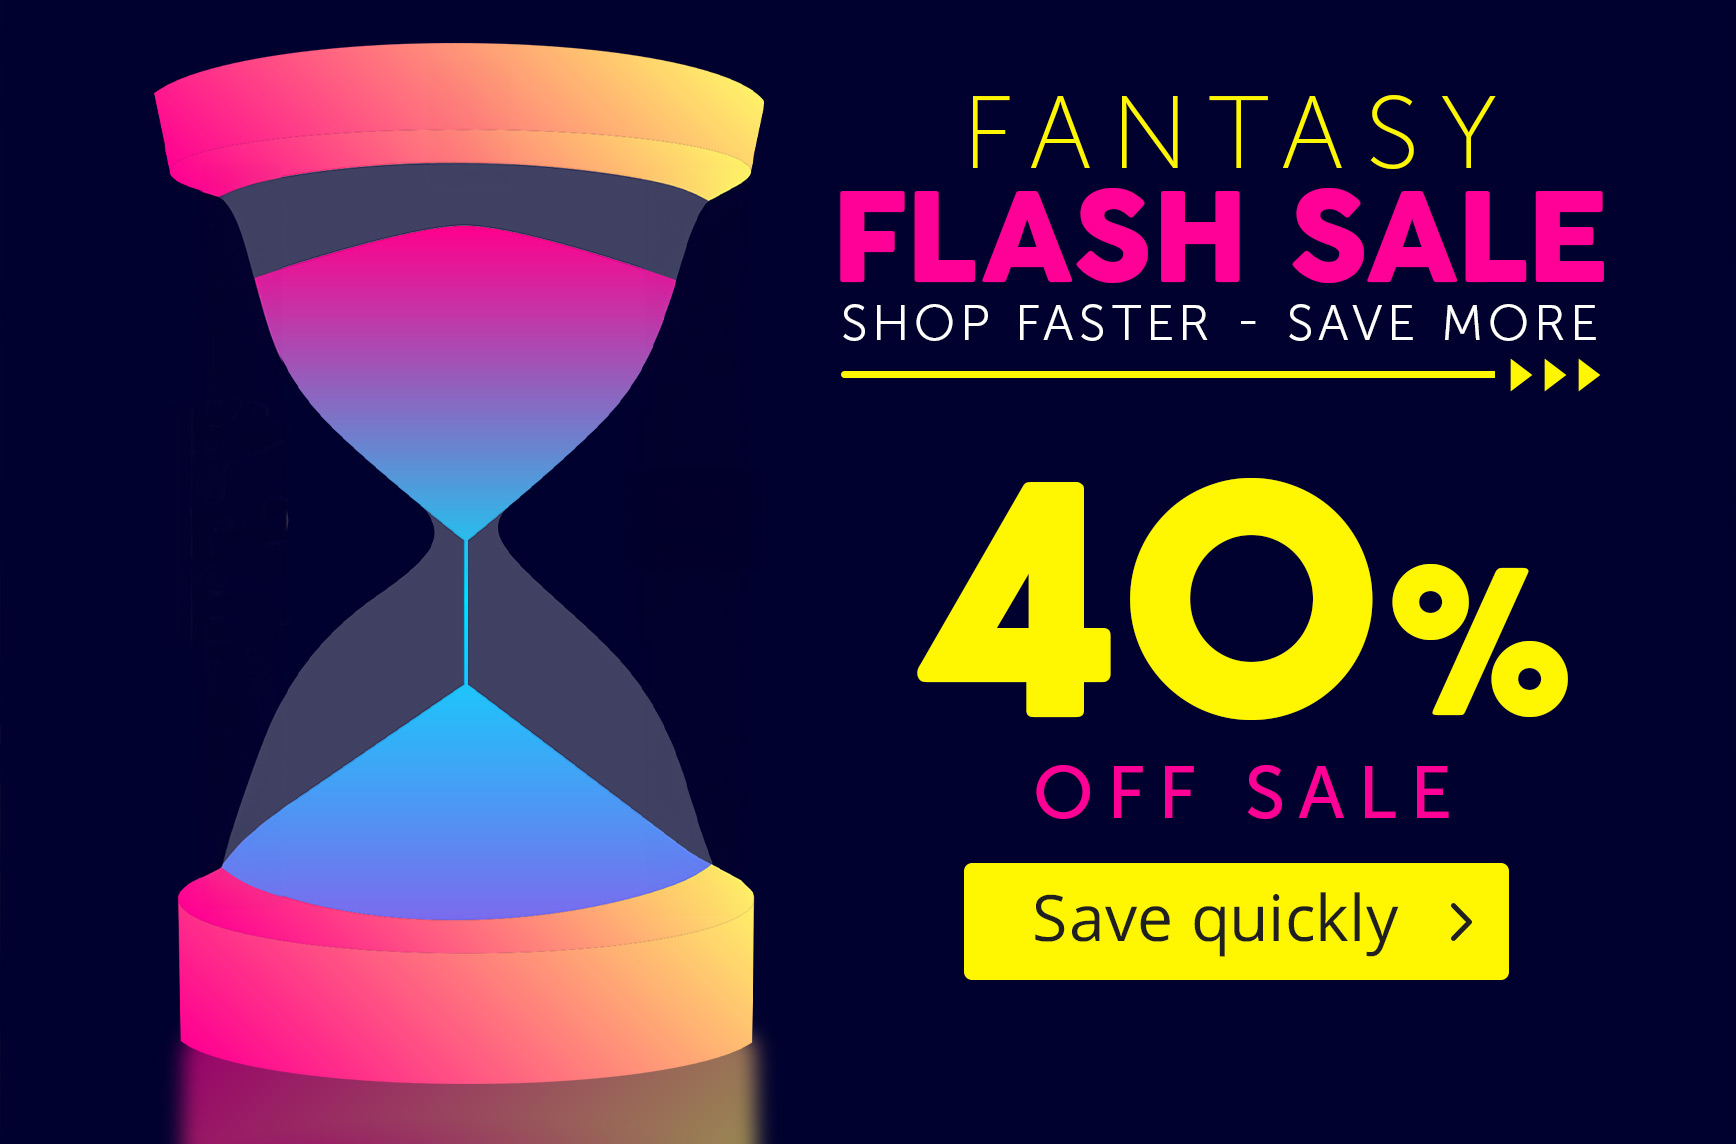 Fantasy Flash Sale - 40% off Sale